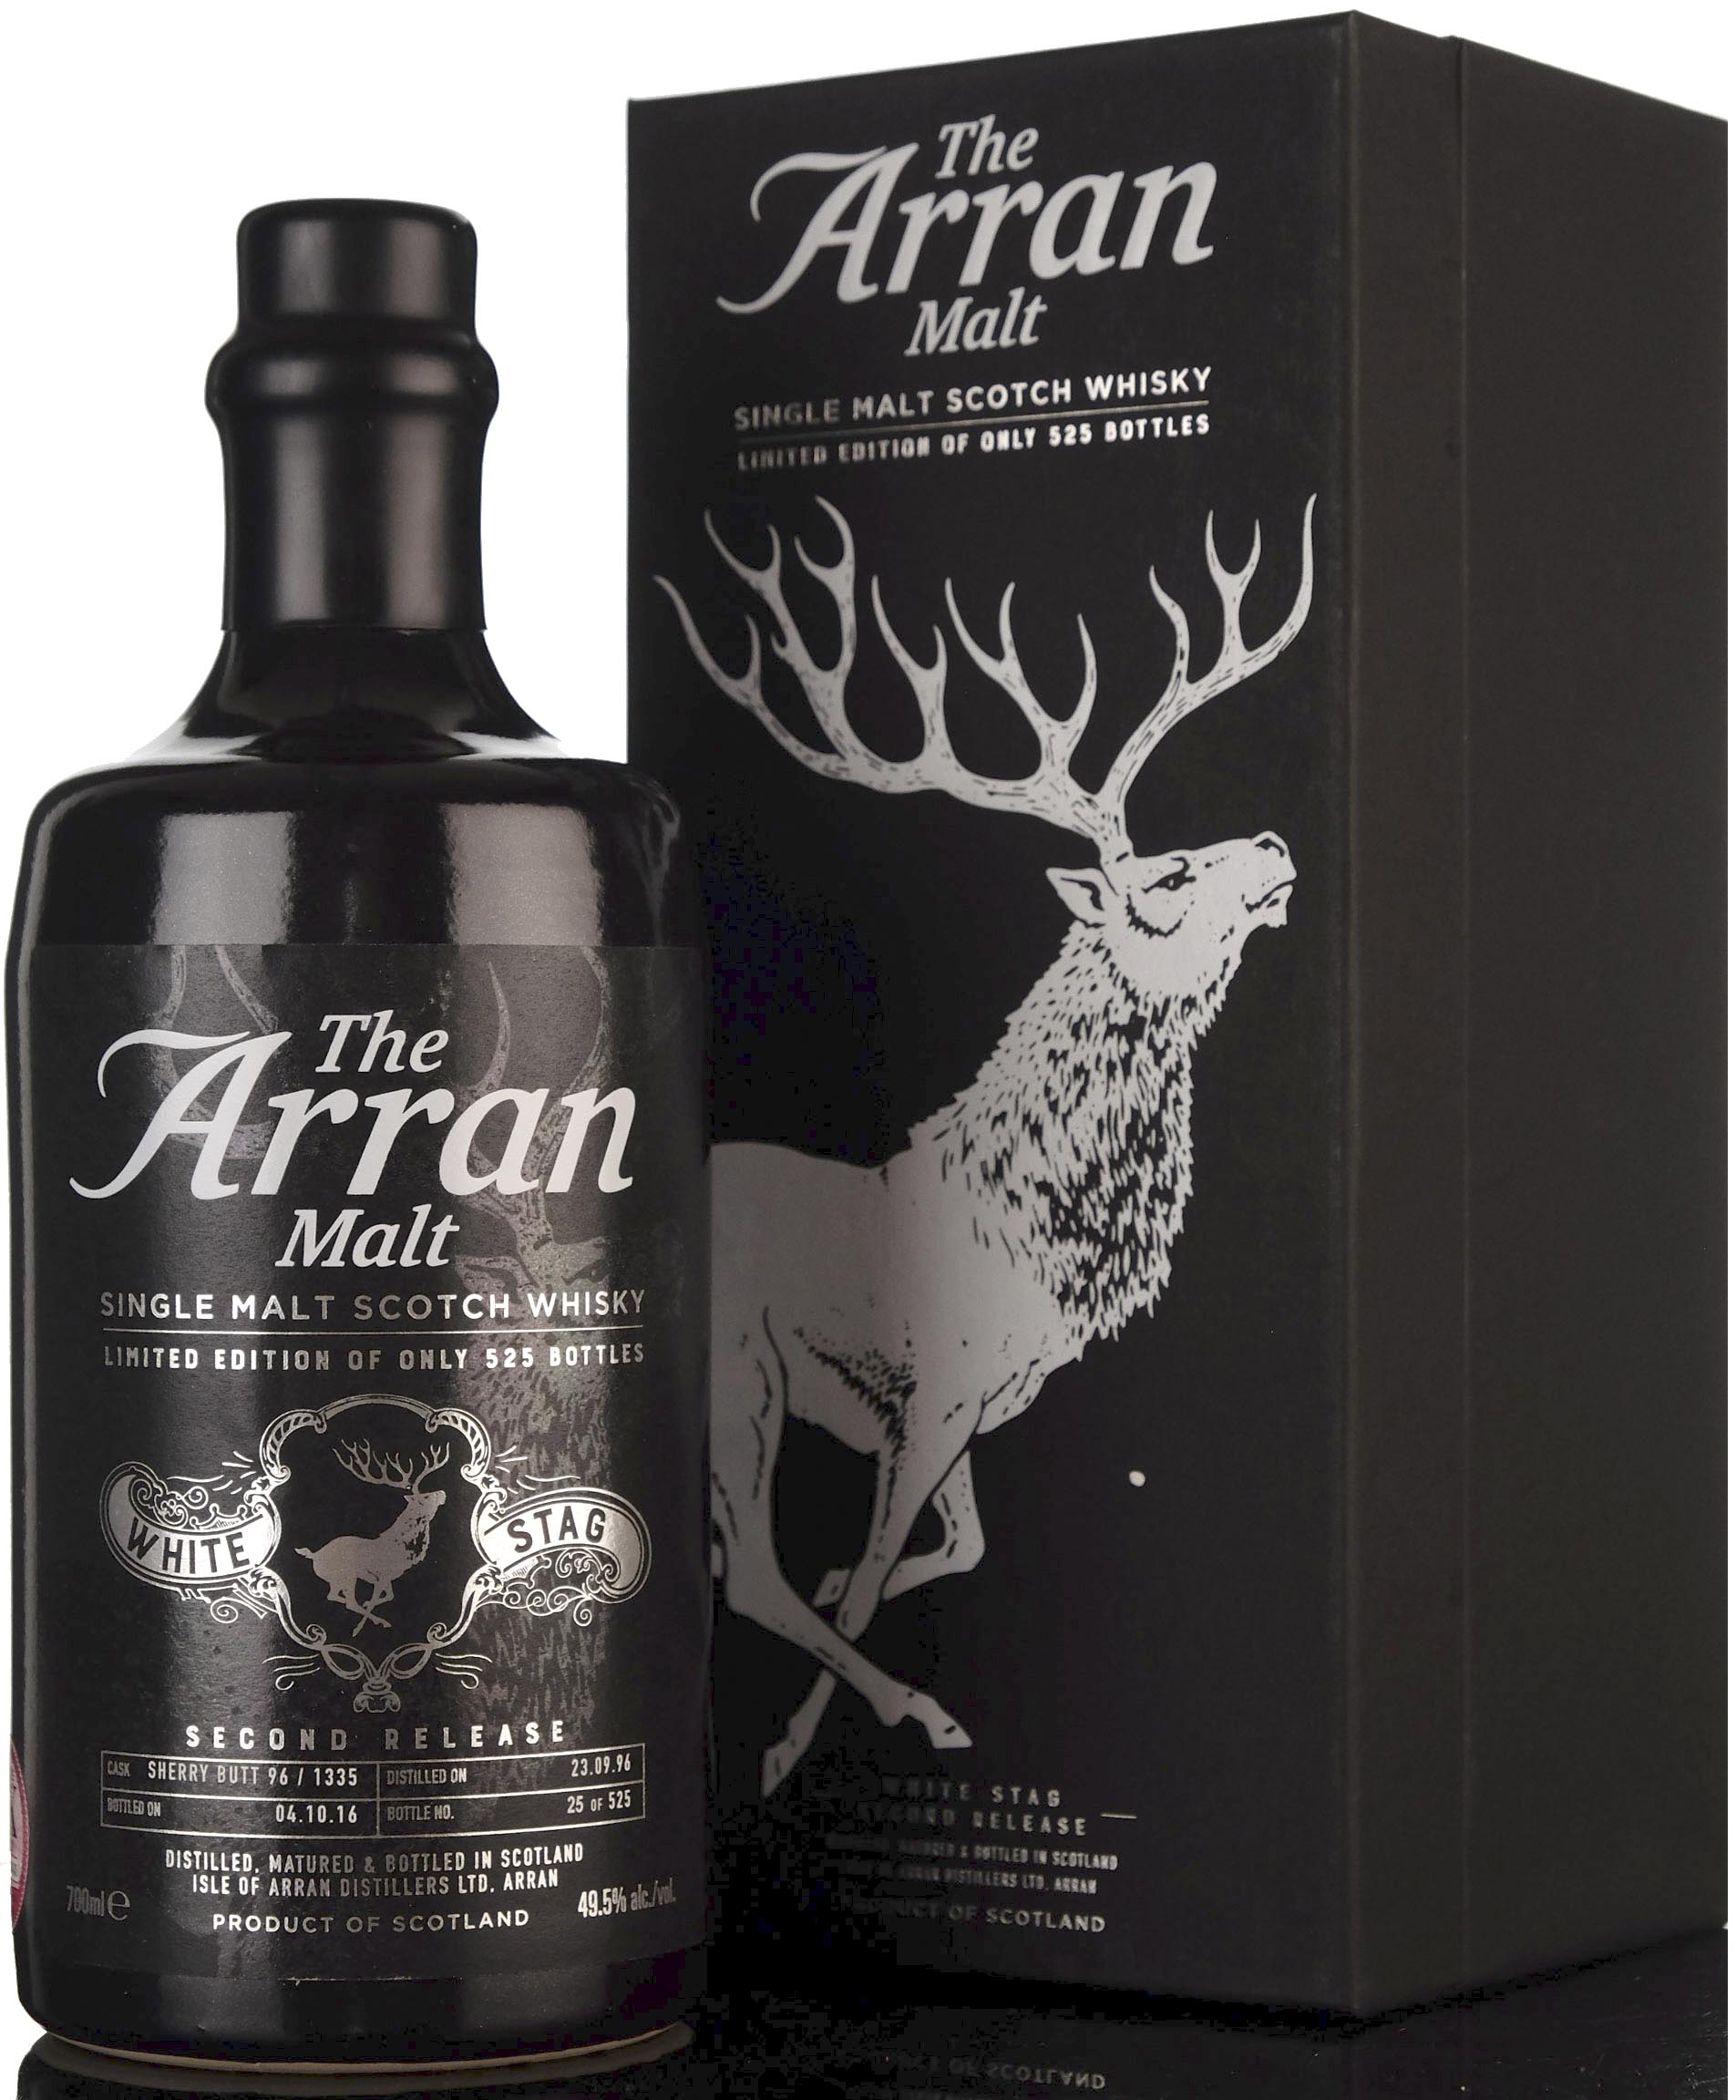 Arran 1996-2016 - White Stag - Second Release